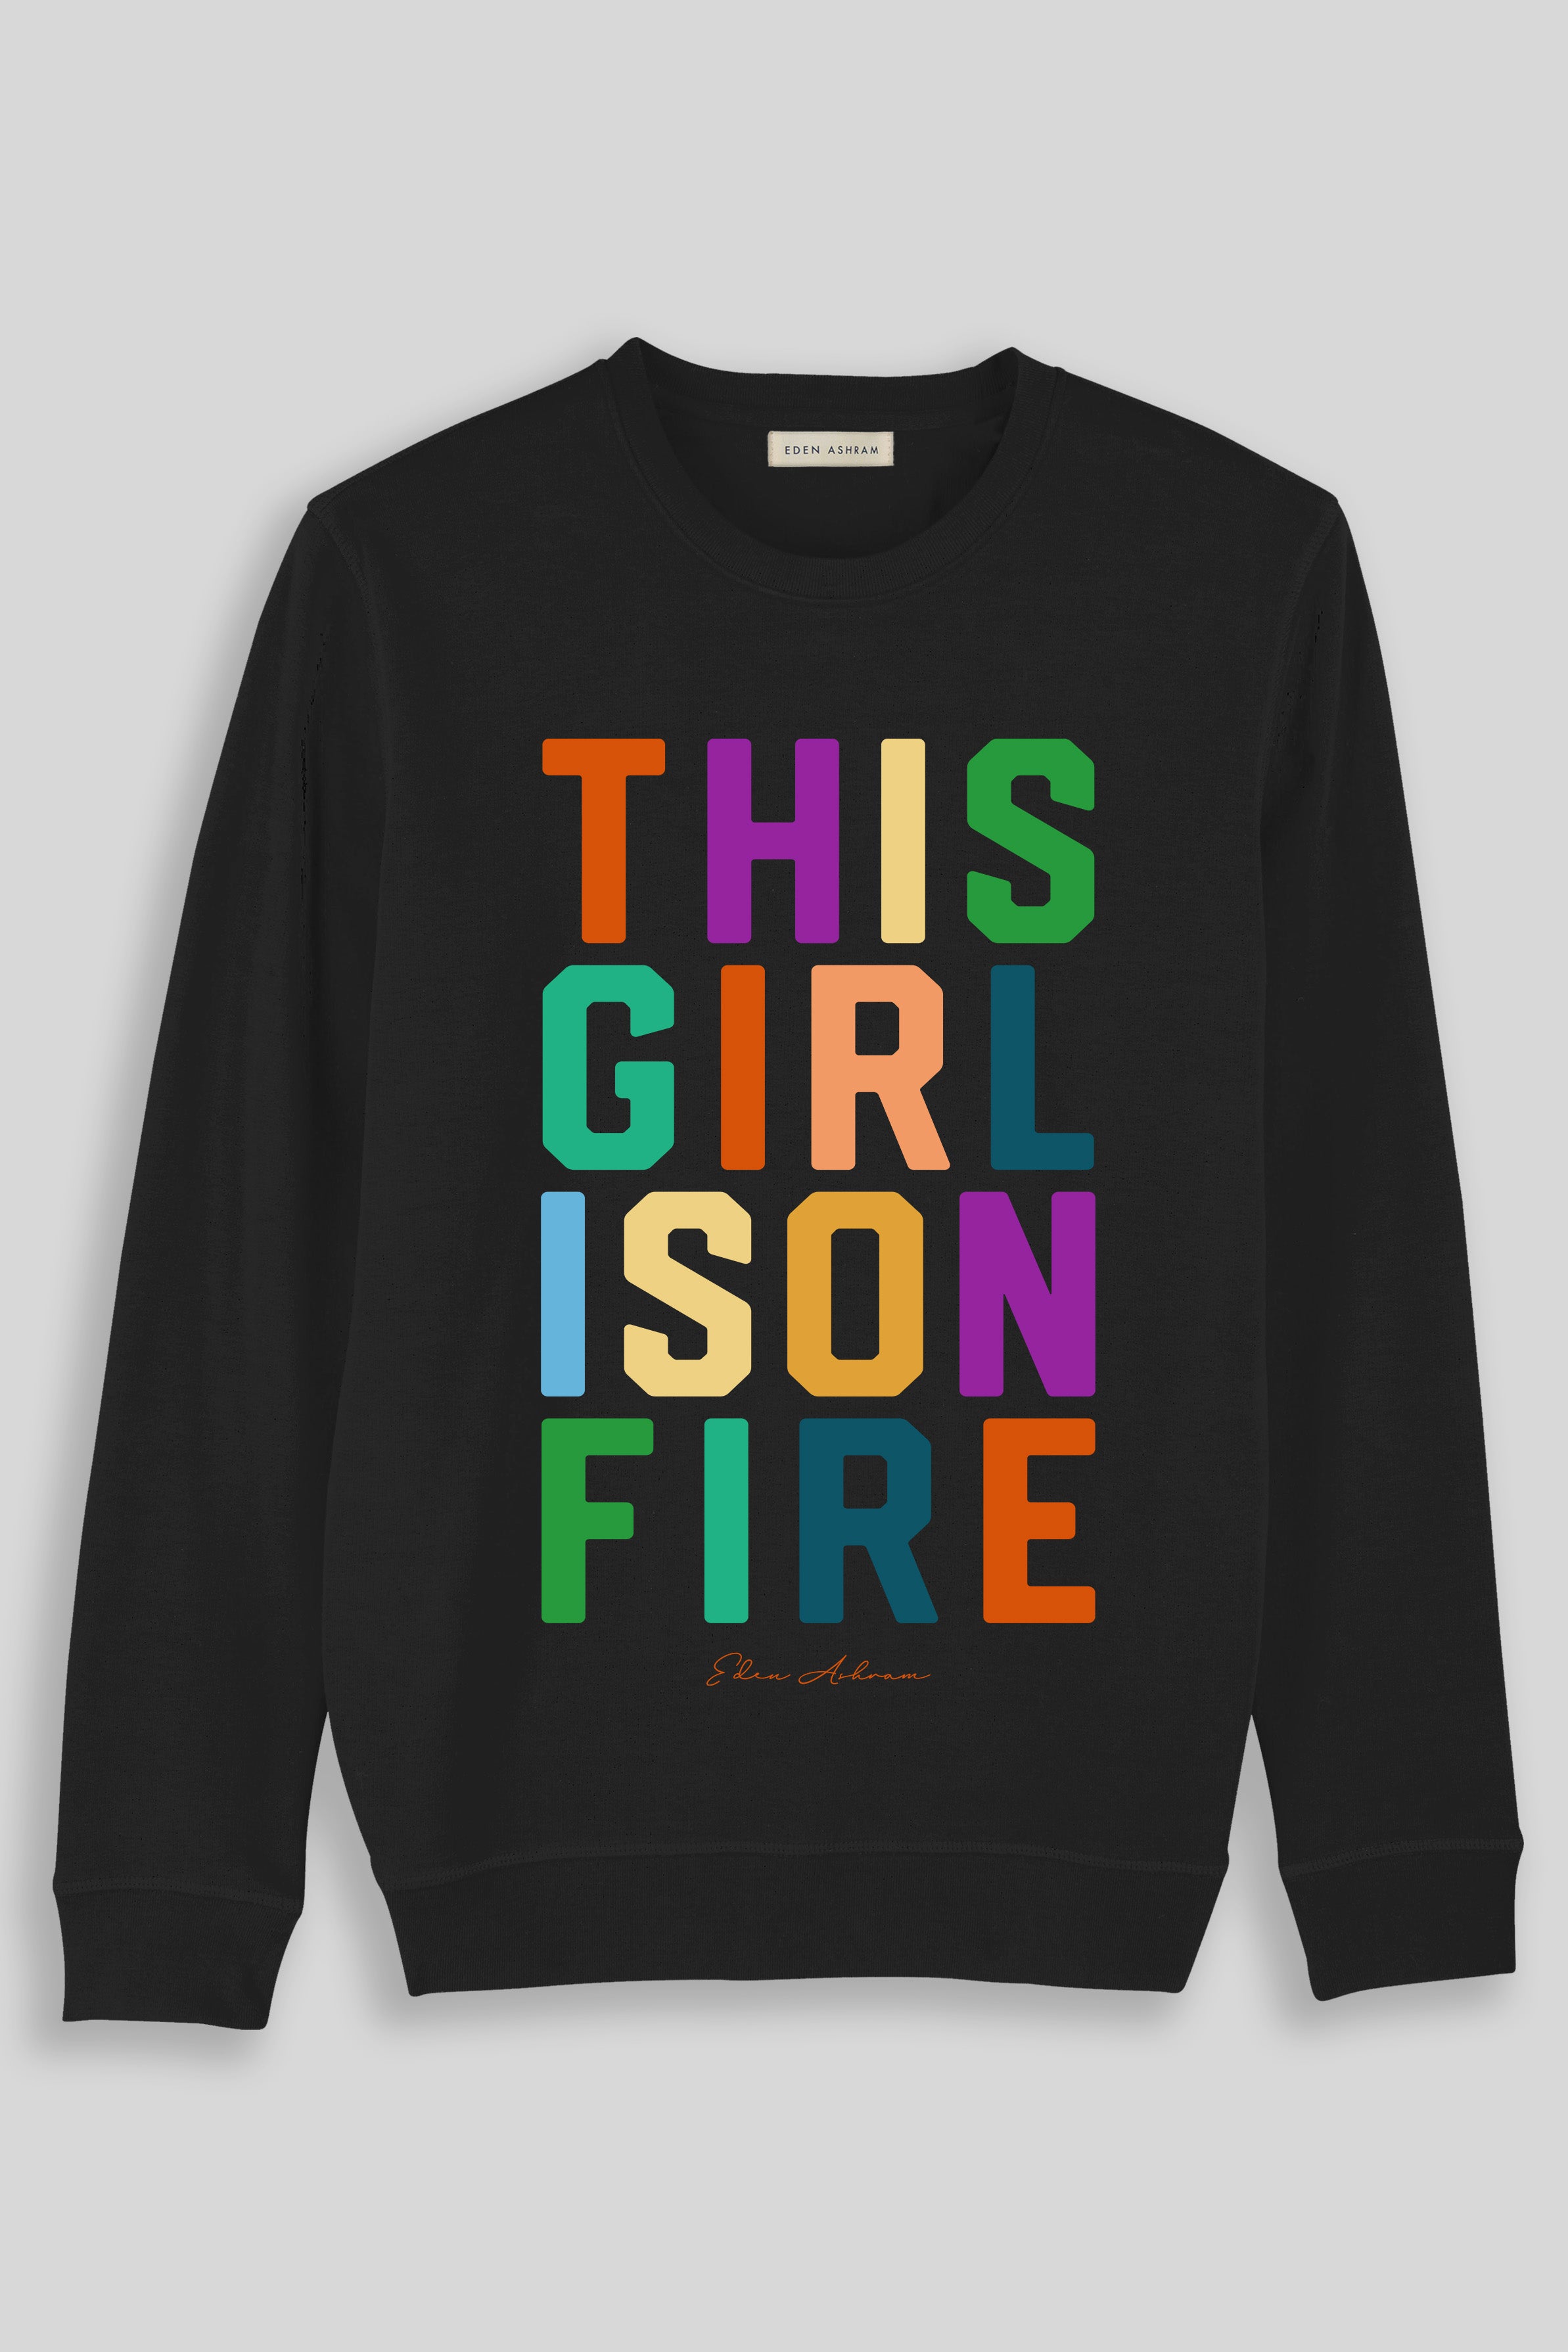 EDEN ASHRAM This Girl Is On Fire Premium Crew Neck Sweatshirt Black